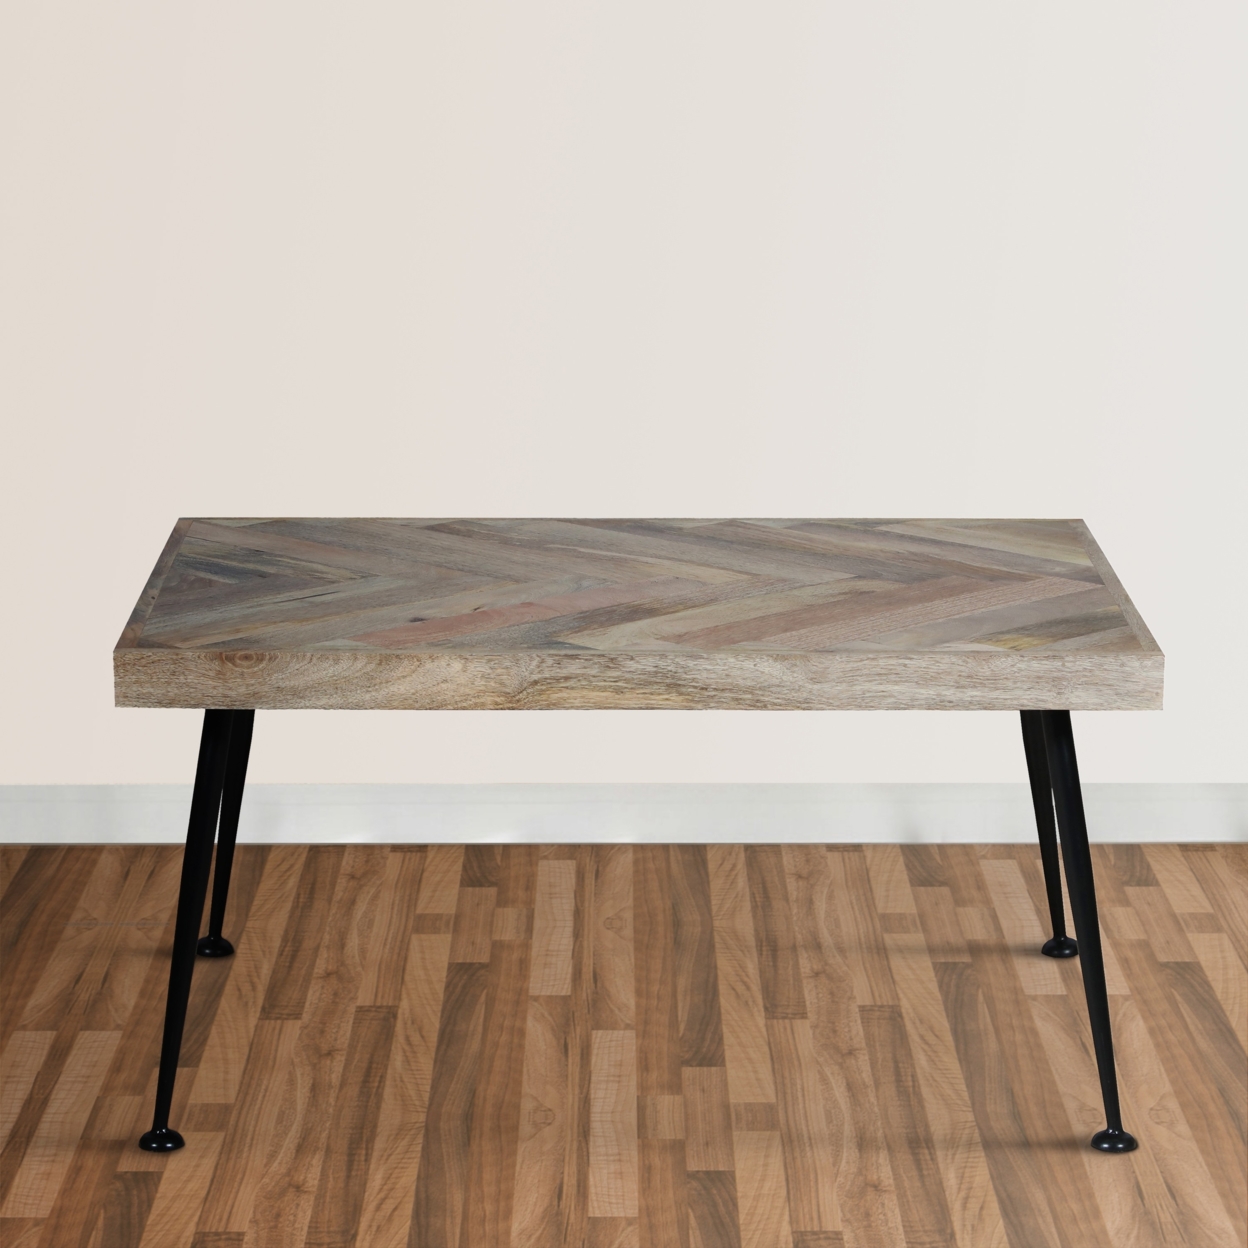 36 Inch Rectangular Mango Wood Coffee Table, Herringbone Design, Iron Legs, Brown, Black- Saltoro Sherpi